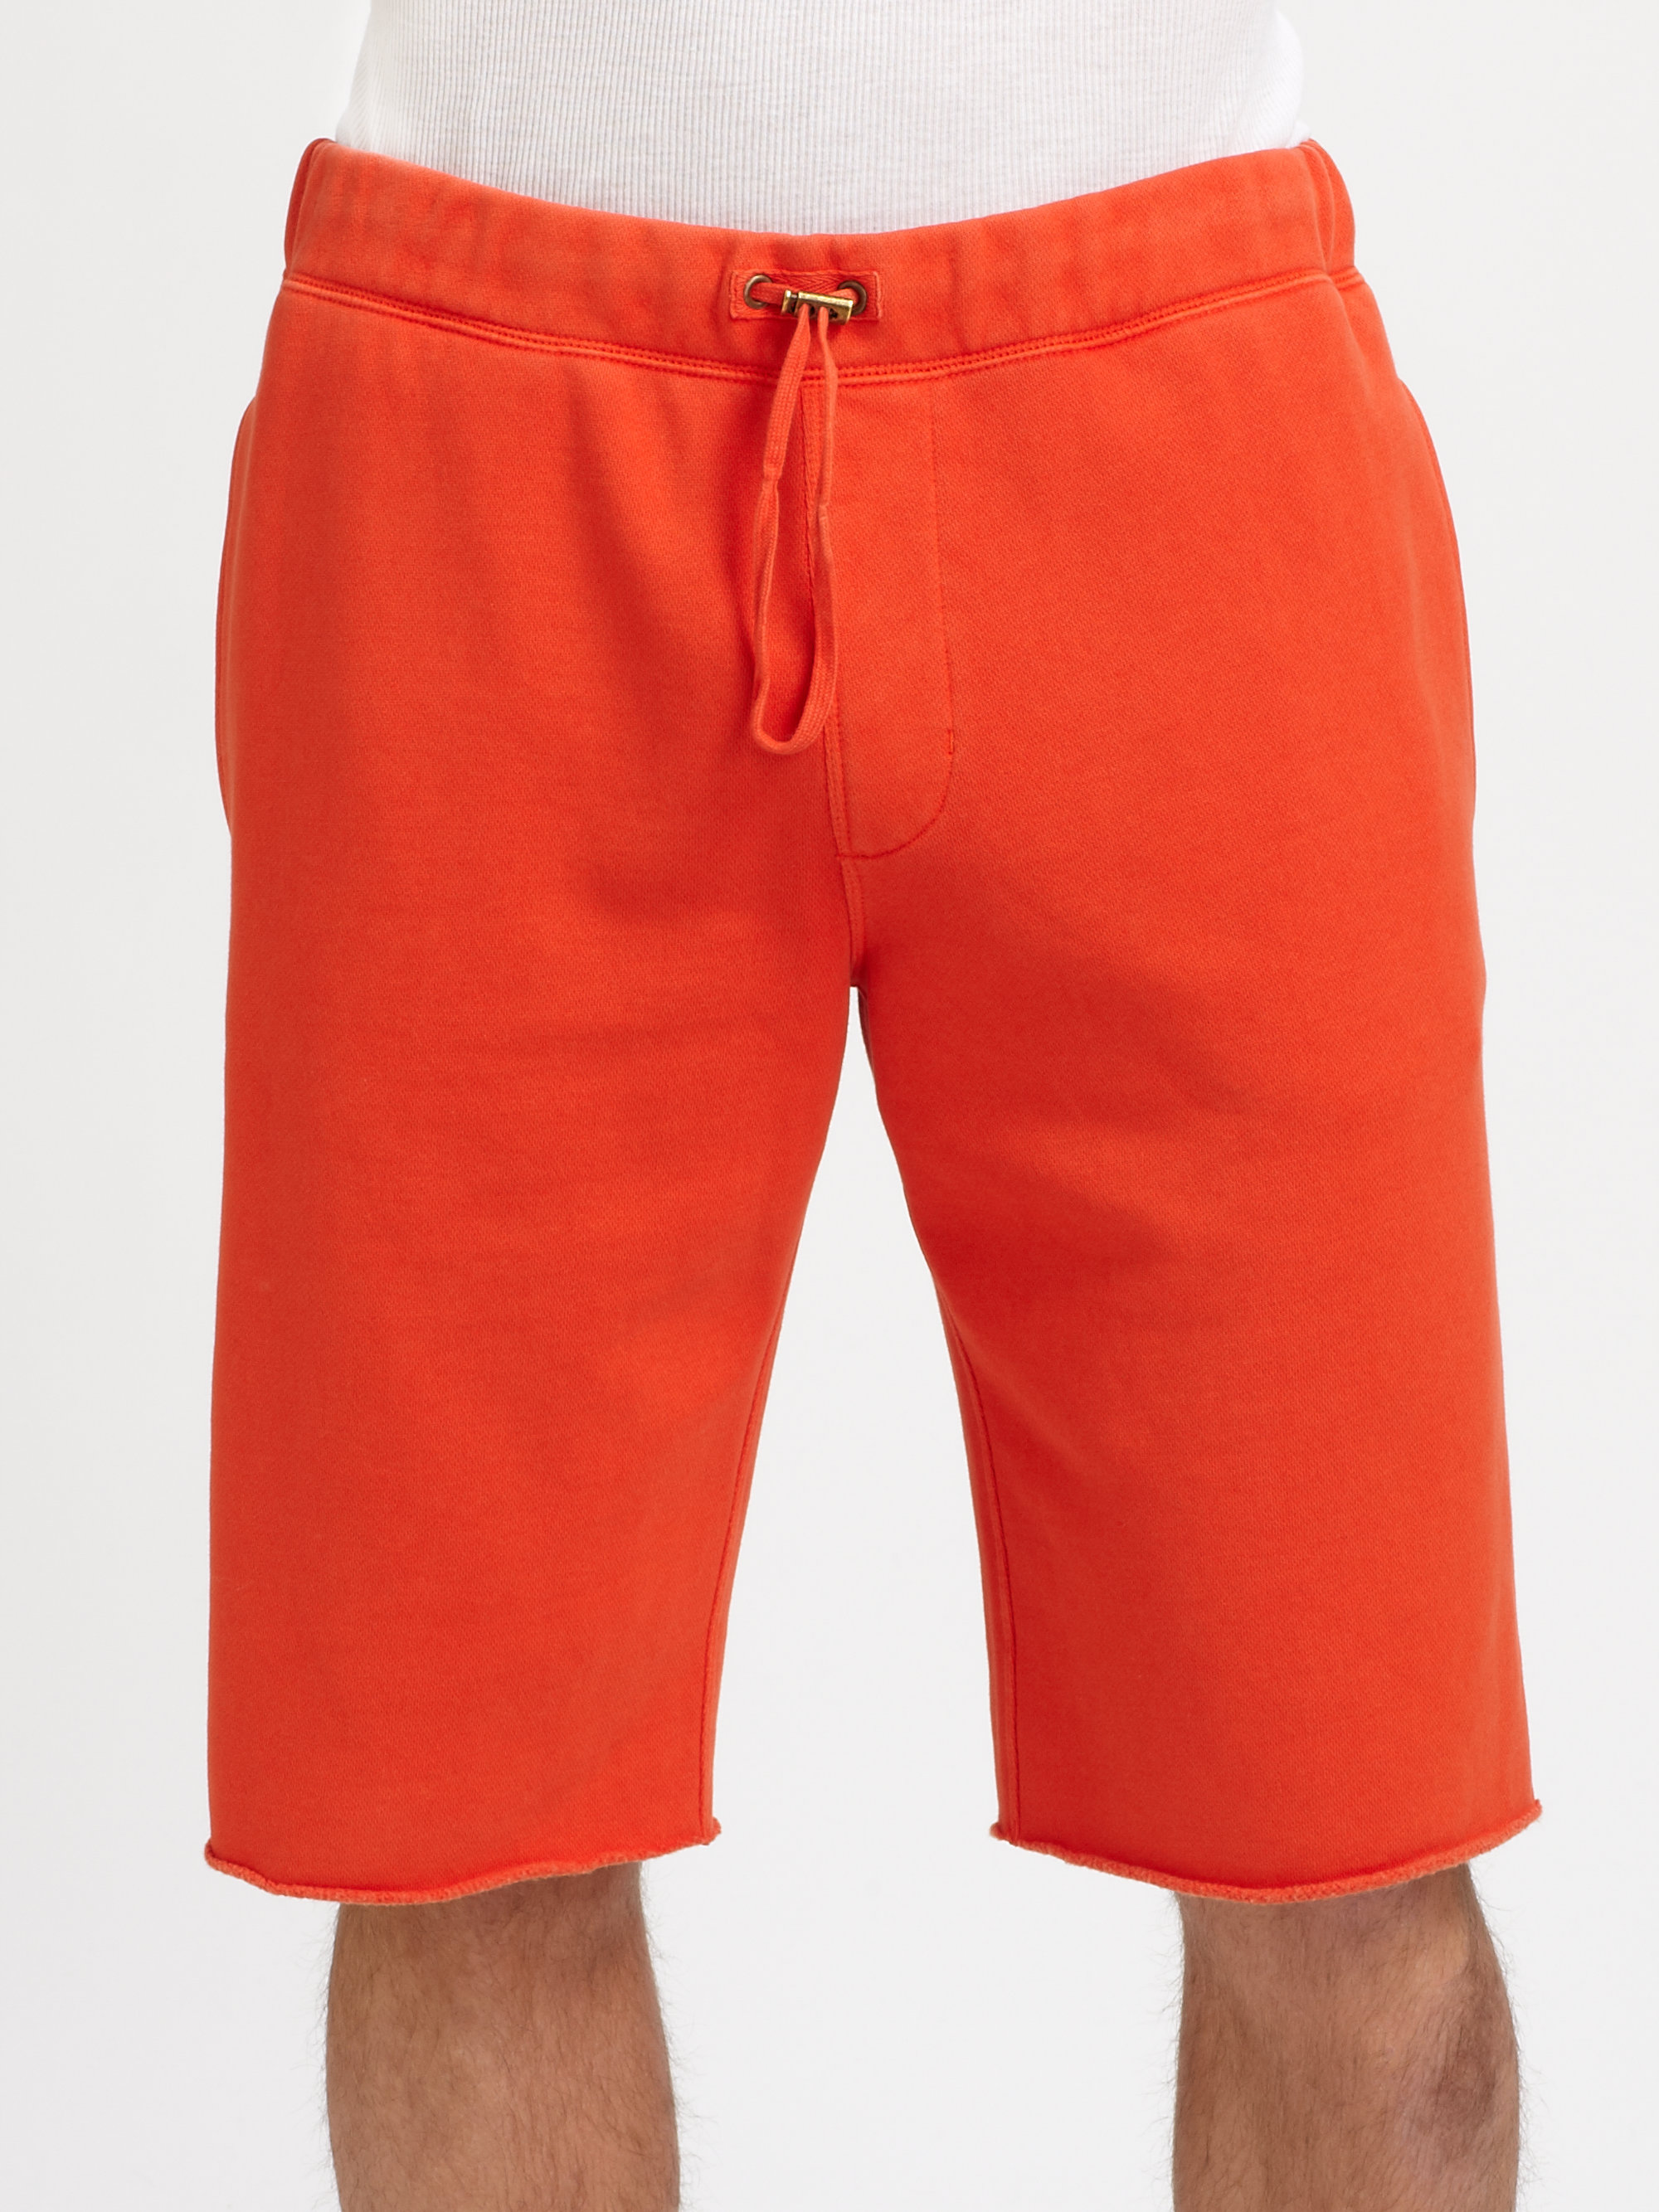 Vince Fleece Jog Shorts in Orange for Men - Lyst